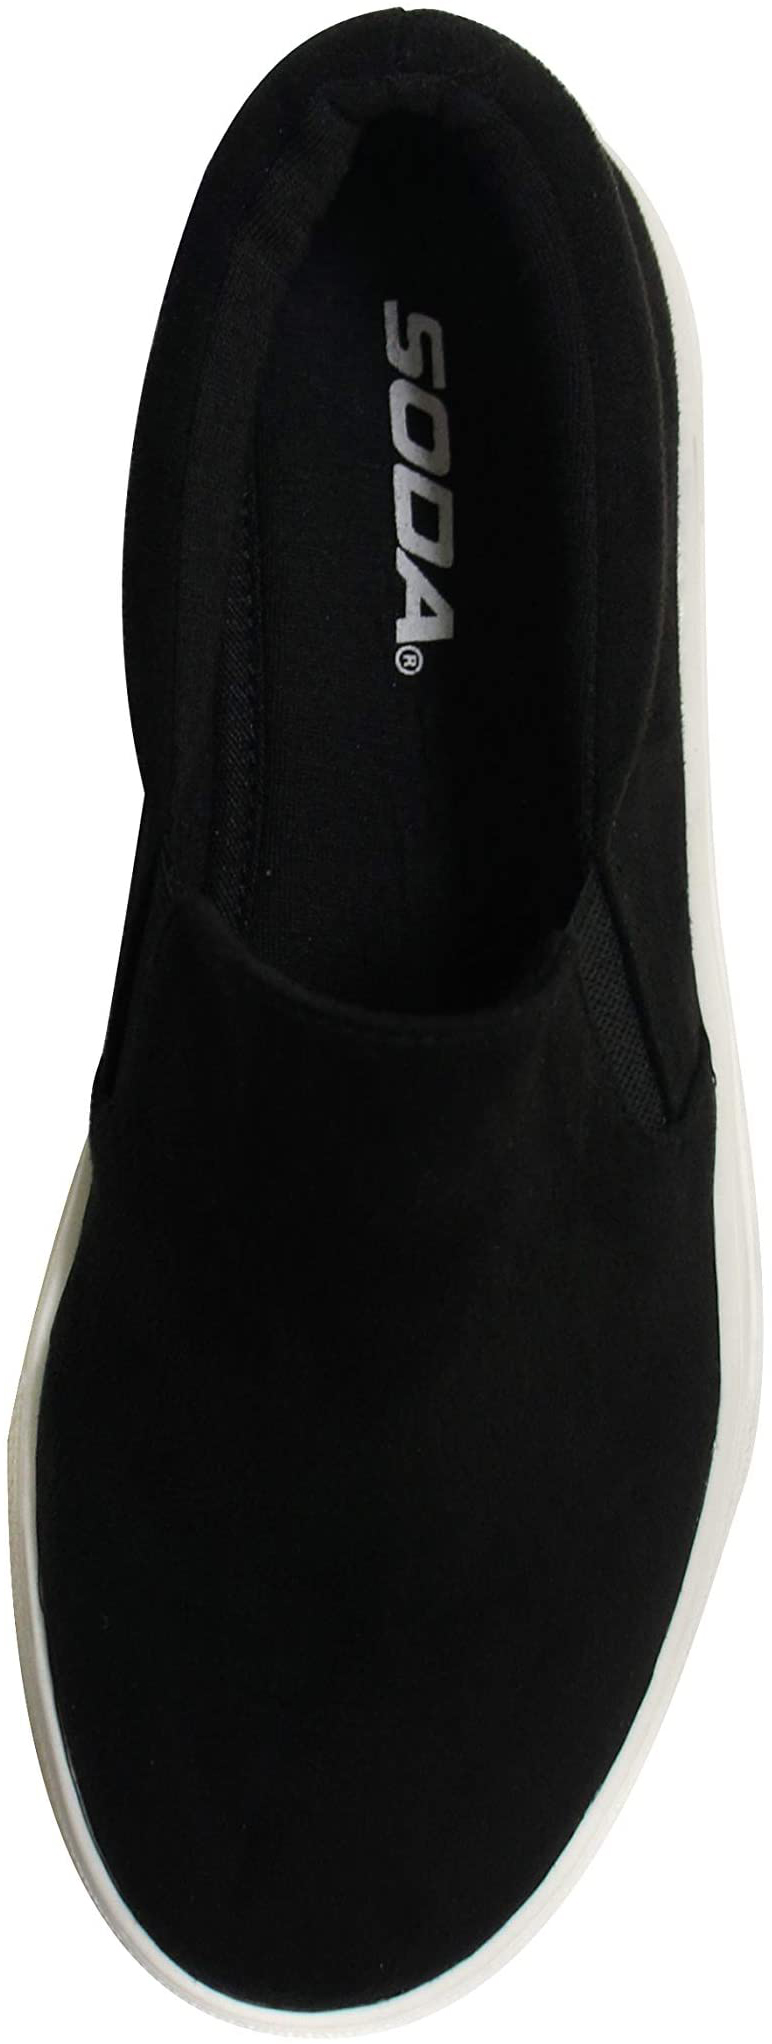 Soda Flat Women Shoes Slip On Loafers Casual Sneakers Memory Foam Insoles Hidden Platform / Flatform Round Toe HIKE-G Black Suede 10 - image 3 of 3